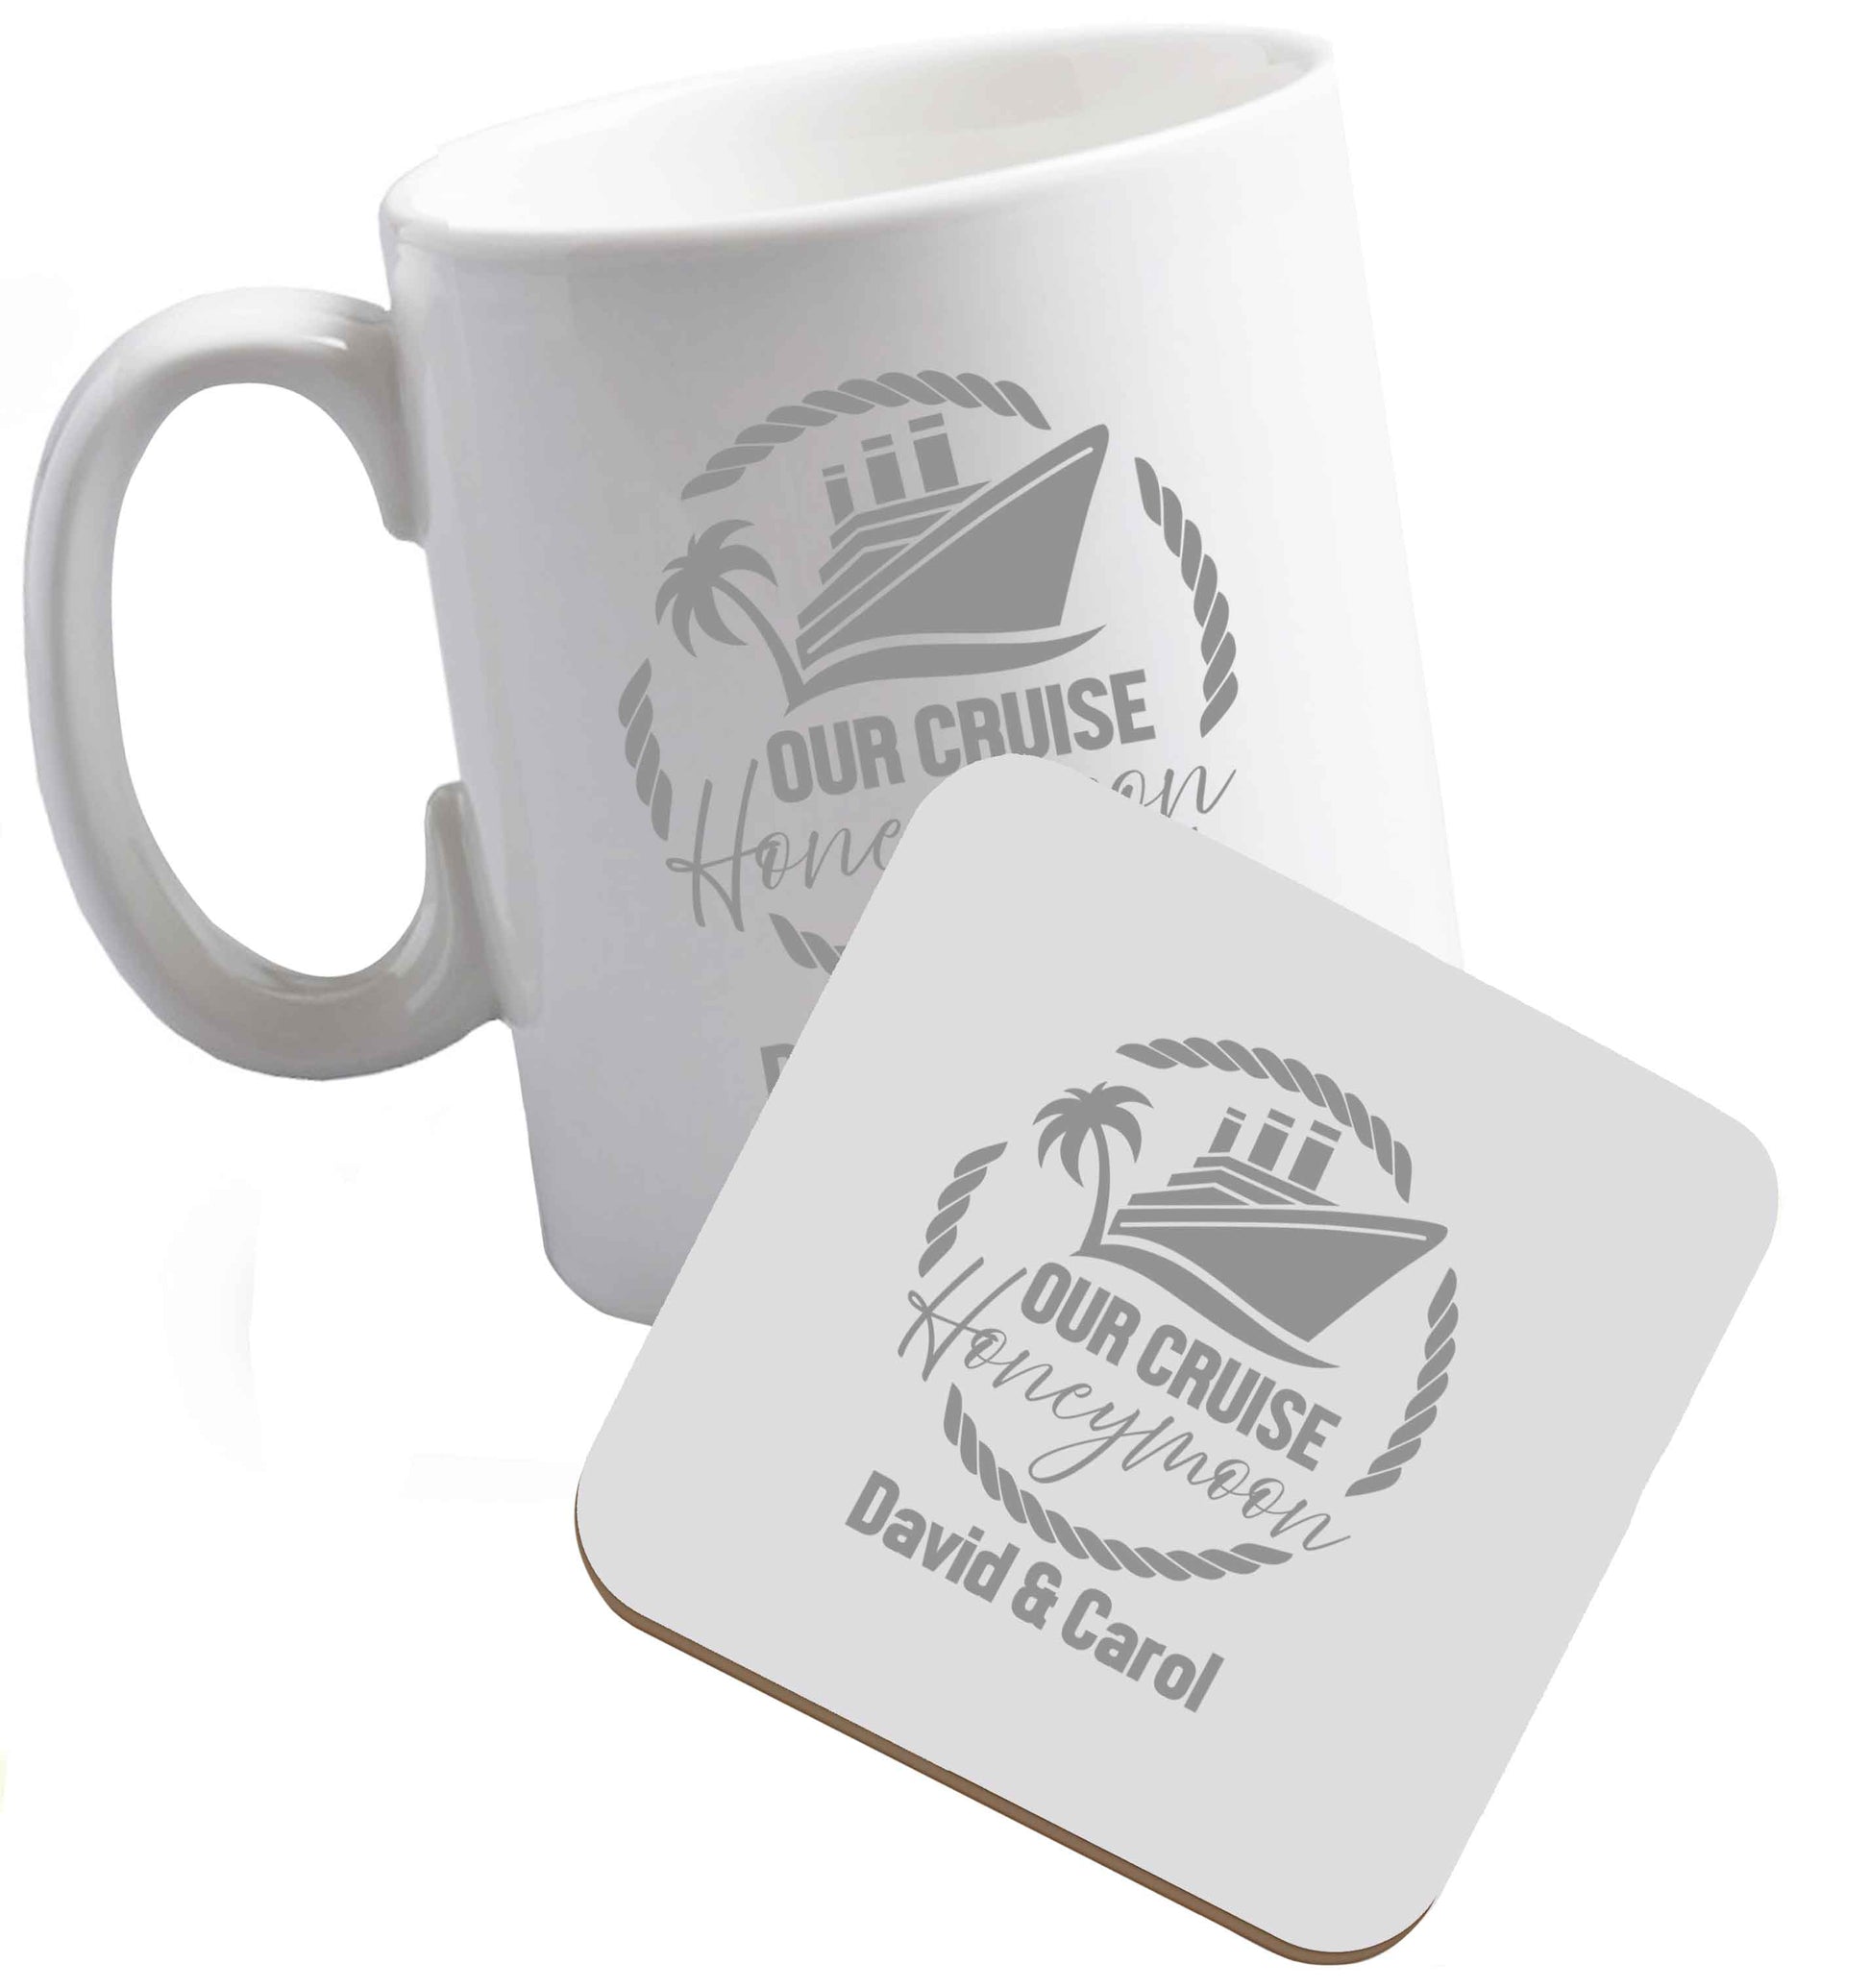 10 oz Our cruise honeymoon personalised ceramic mug and coaster set right handed